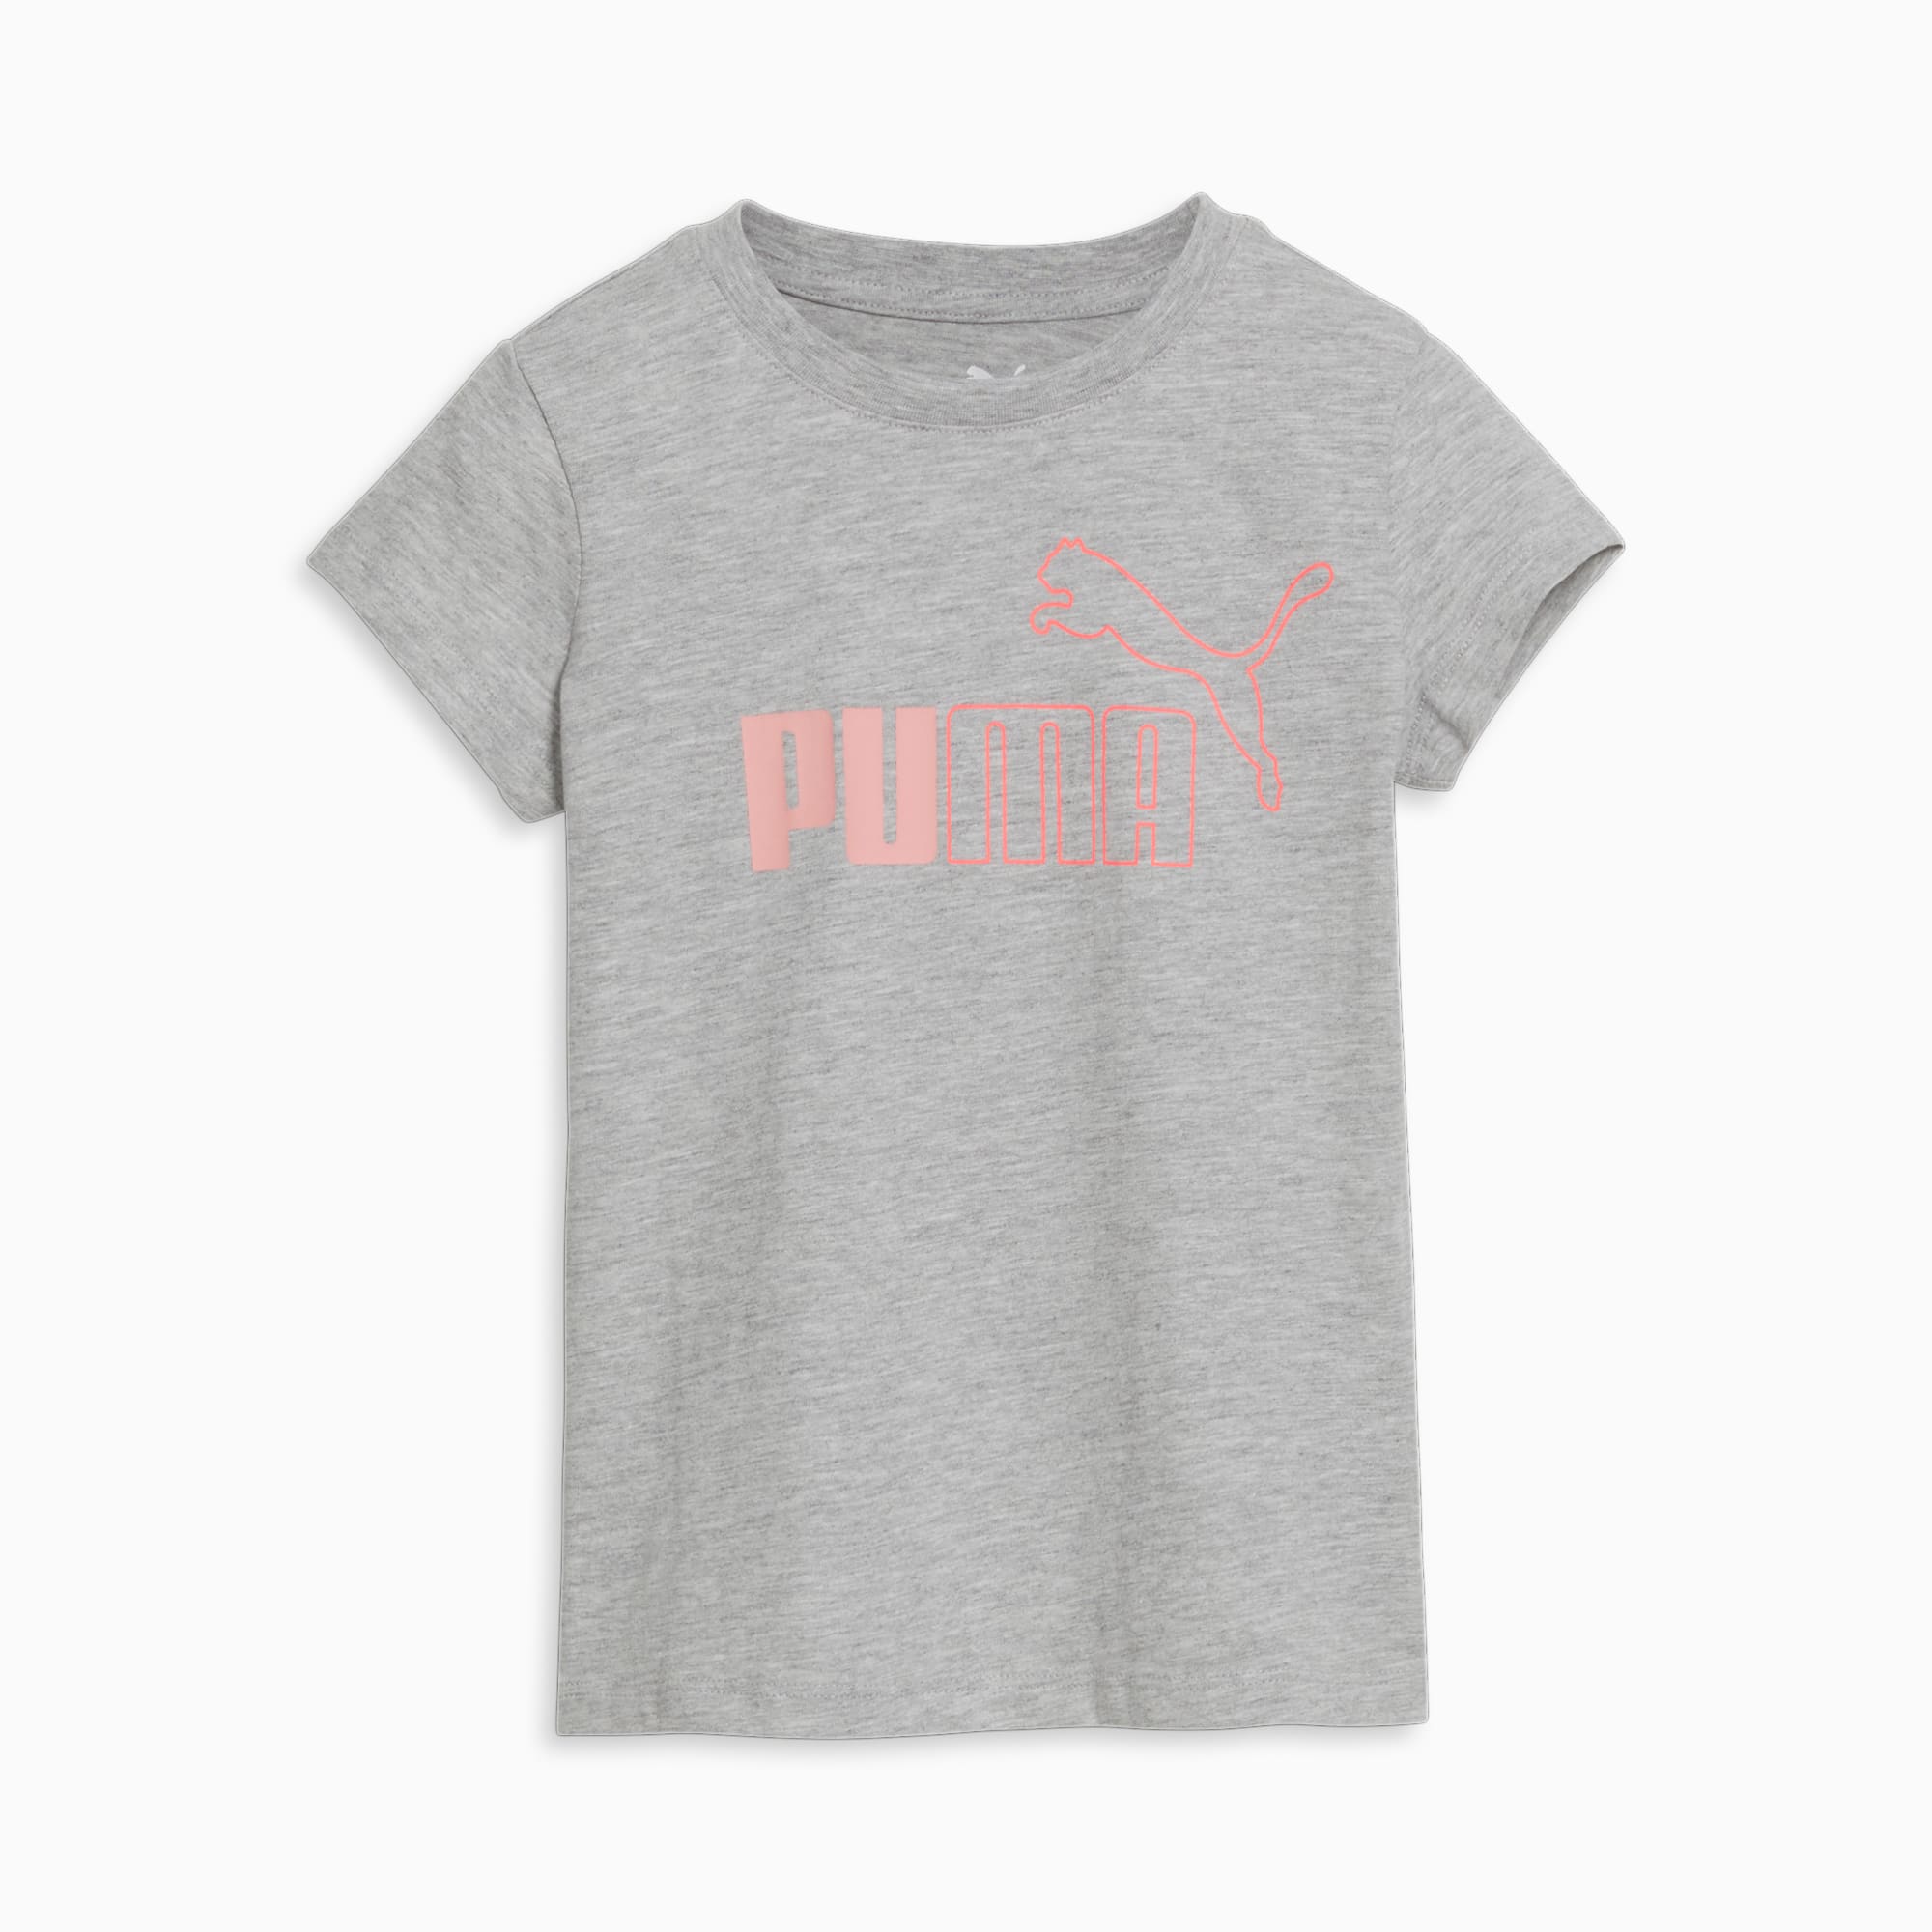 PUMA Camiseta Mujer Essentials Logo XXS Peach Smoothie Pink